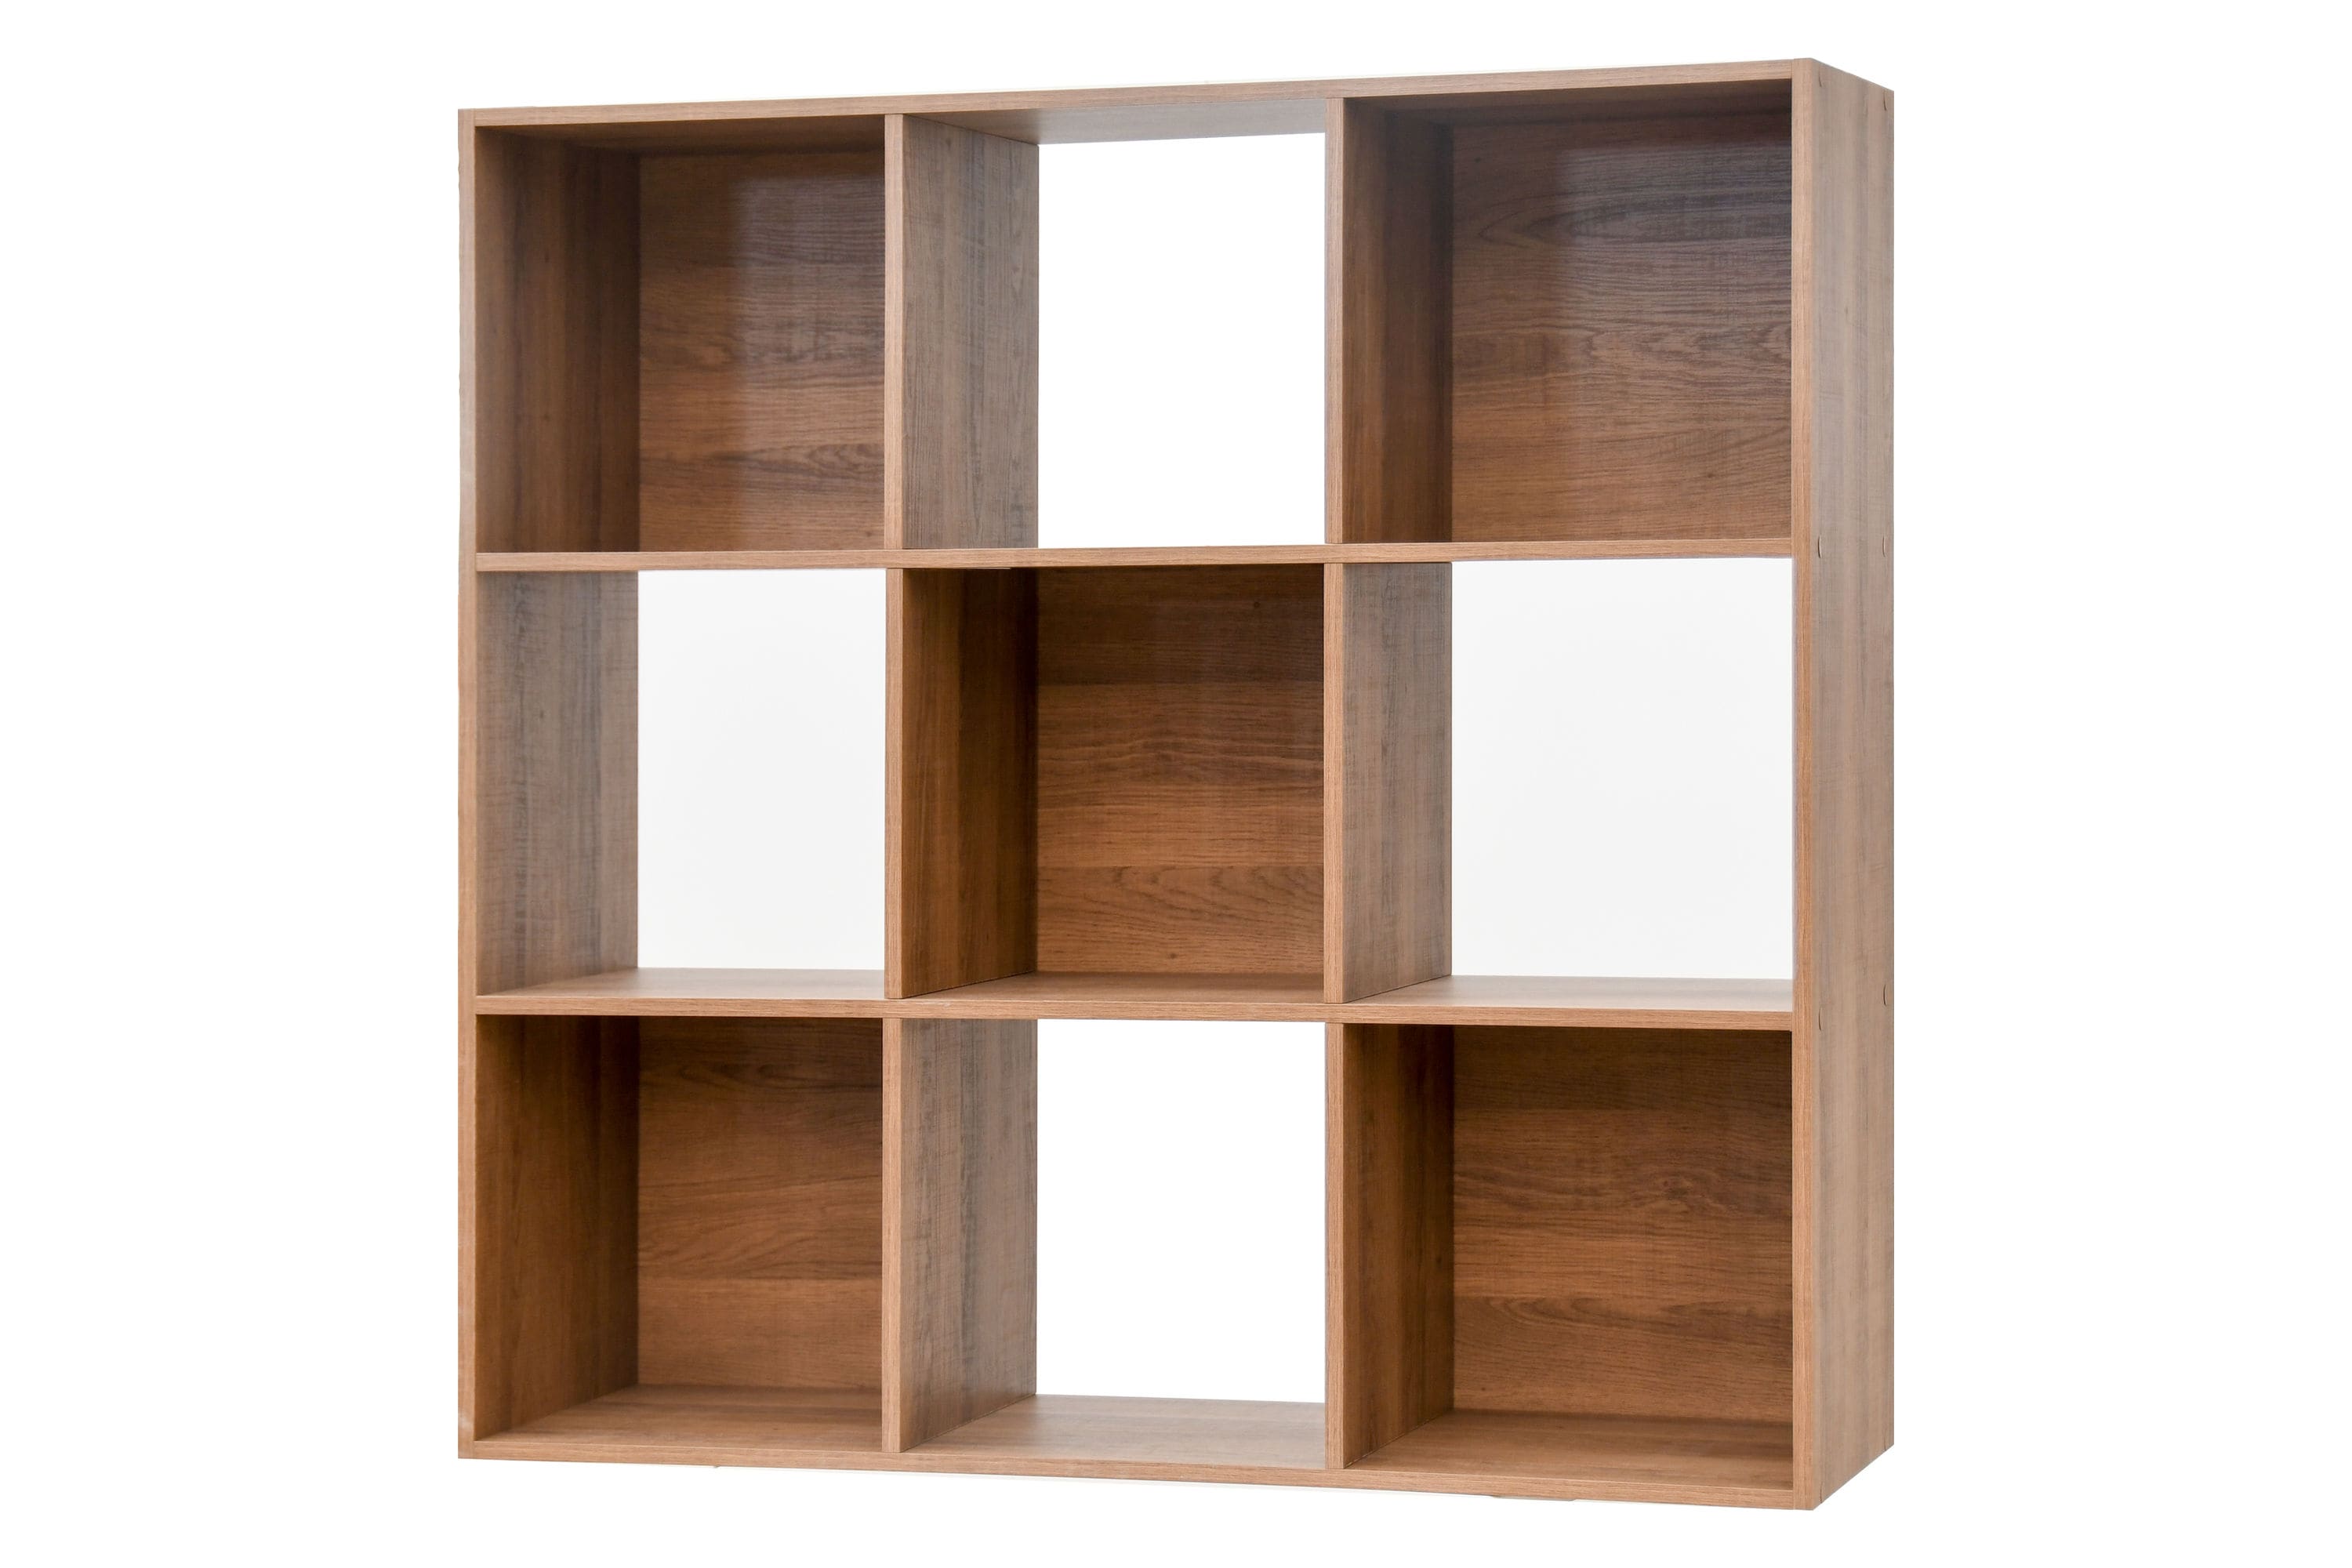 Aeitc Cube Storage Organizer 5-Cube Slim Cabinet for Bathroom Shelves  Plastic Storage with Doors, Kitchen